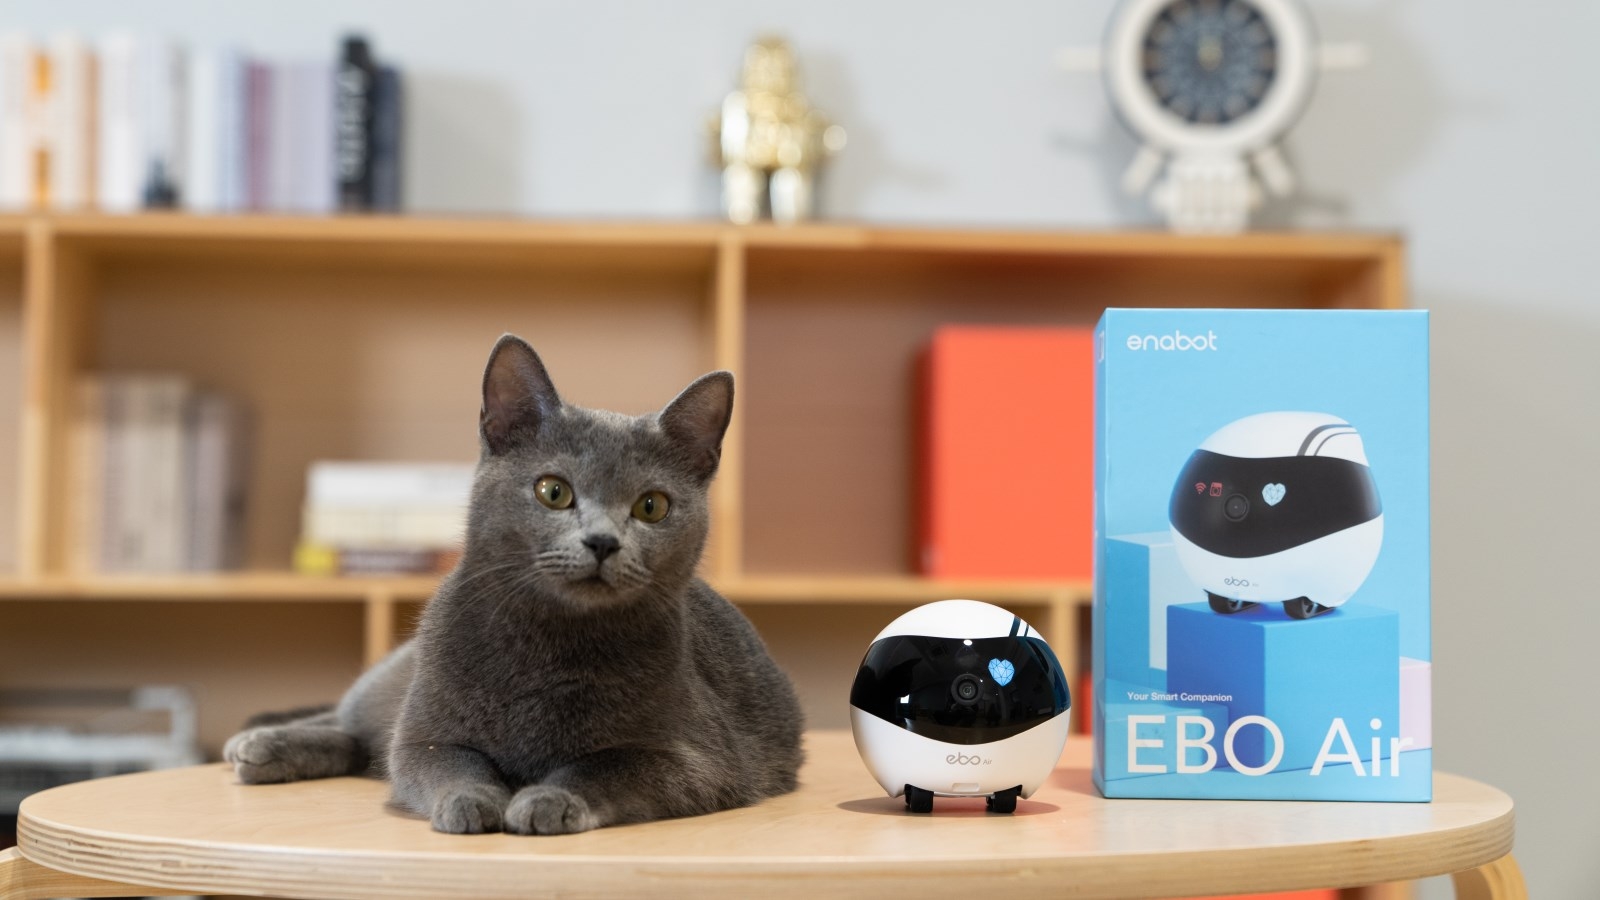 EBO ROBOT, EBO ENABOT, EBO Smart Robot for Pretty Cat, Awesome Cat Robot